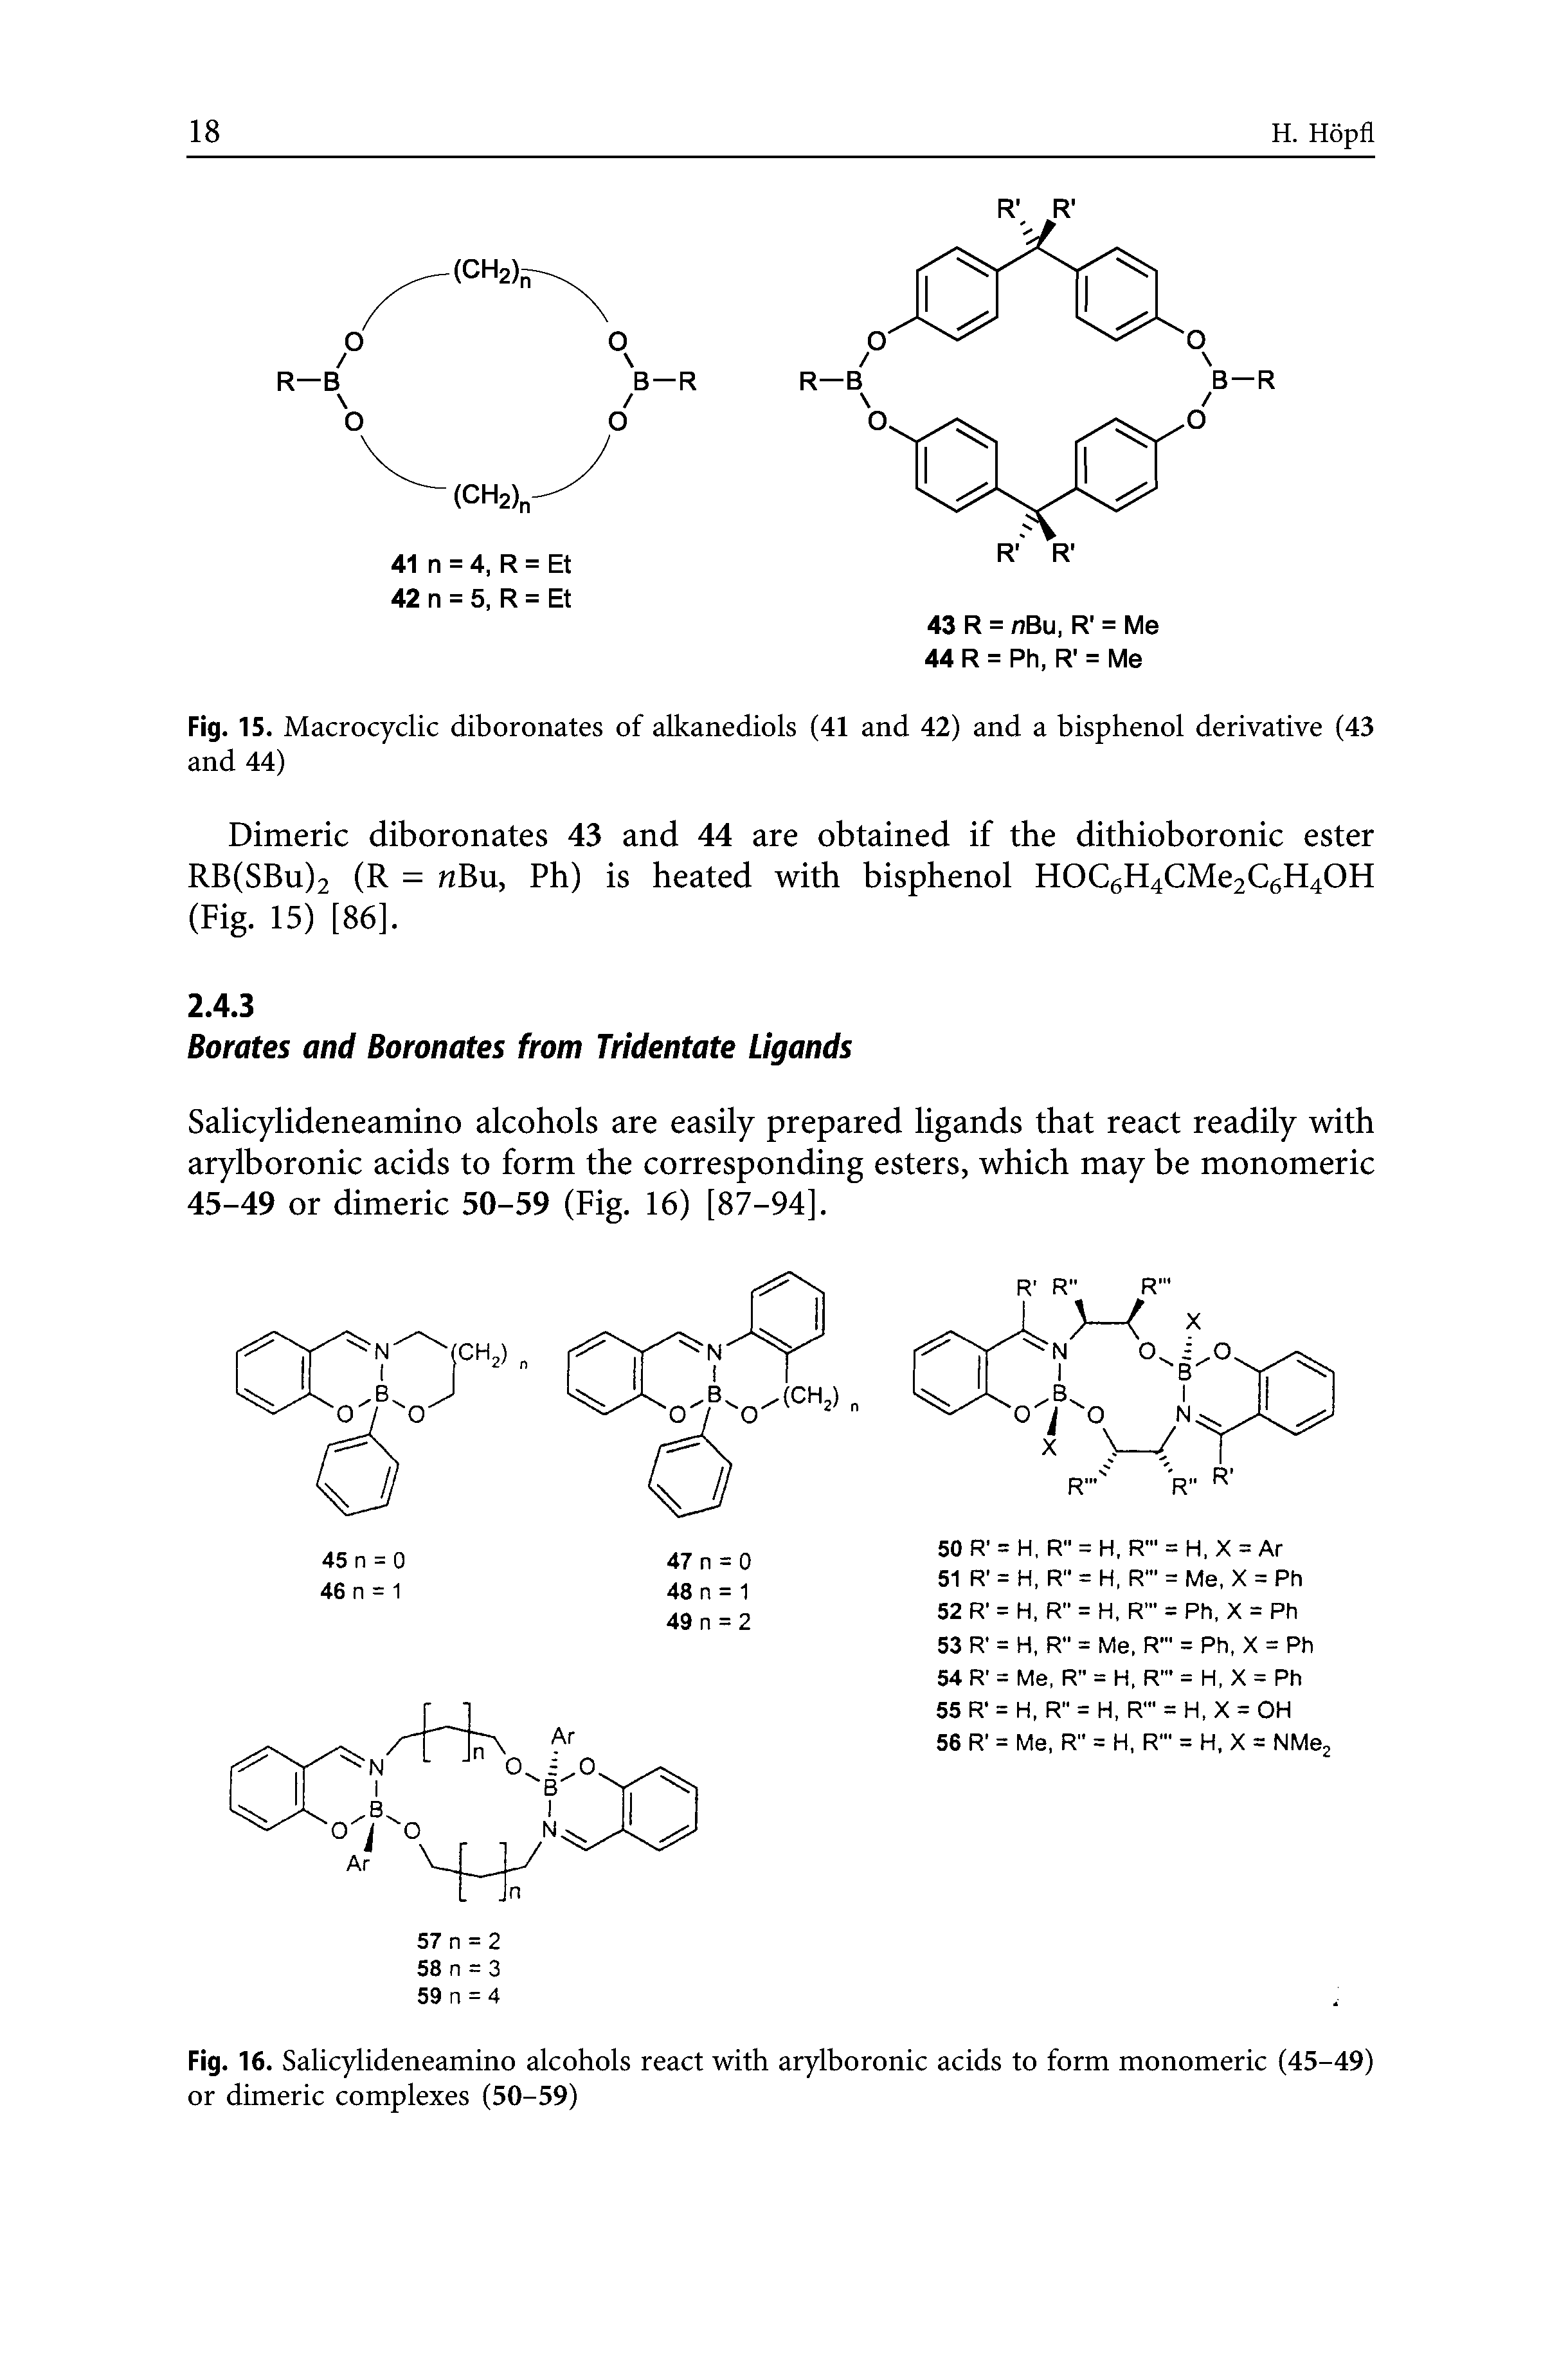 Fig. 16. Salicylideneamino alcohols react with arylboronic acids to form monomeric (45-49) or dimeric complexes (50-59)...